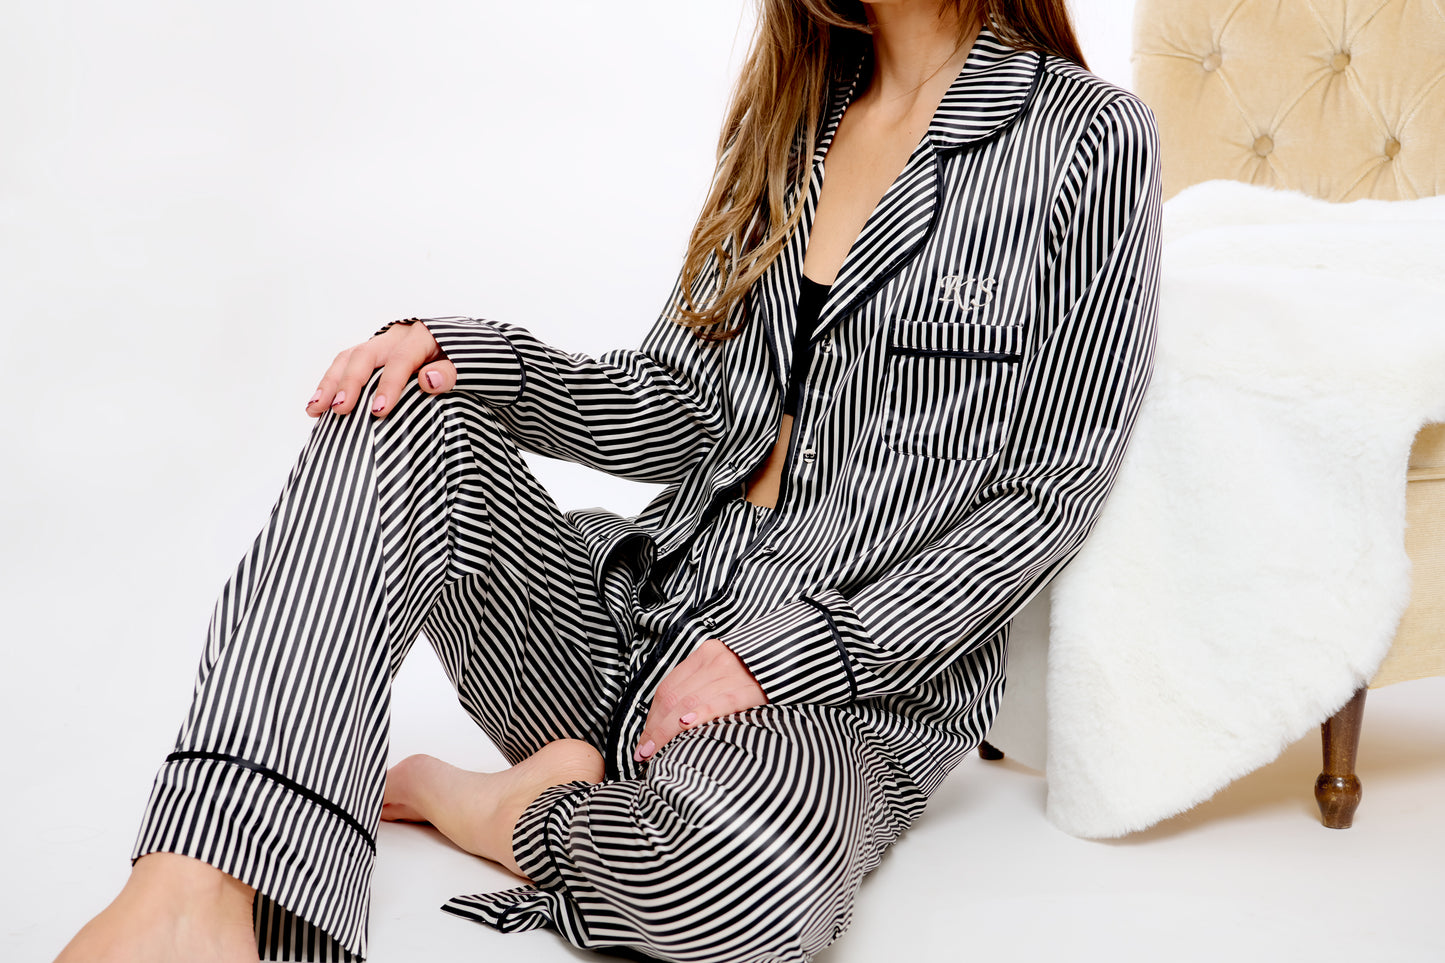 Personalised Satin Black Stripe Long Pyjama Set